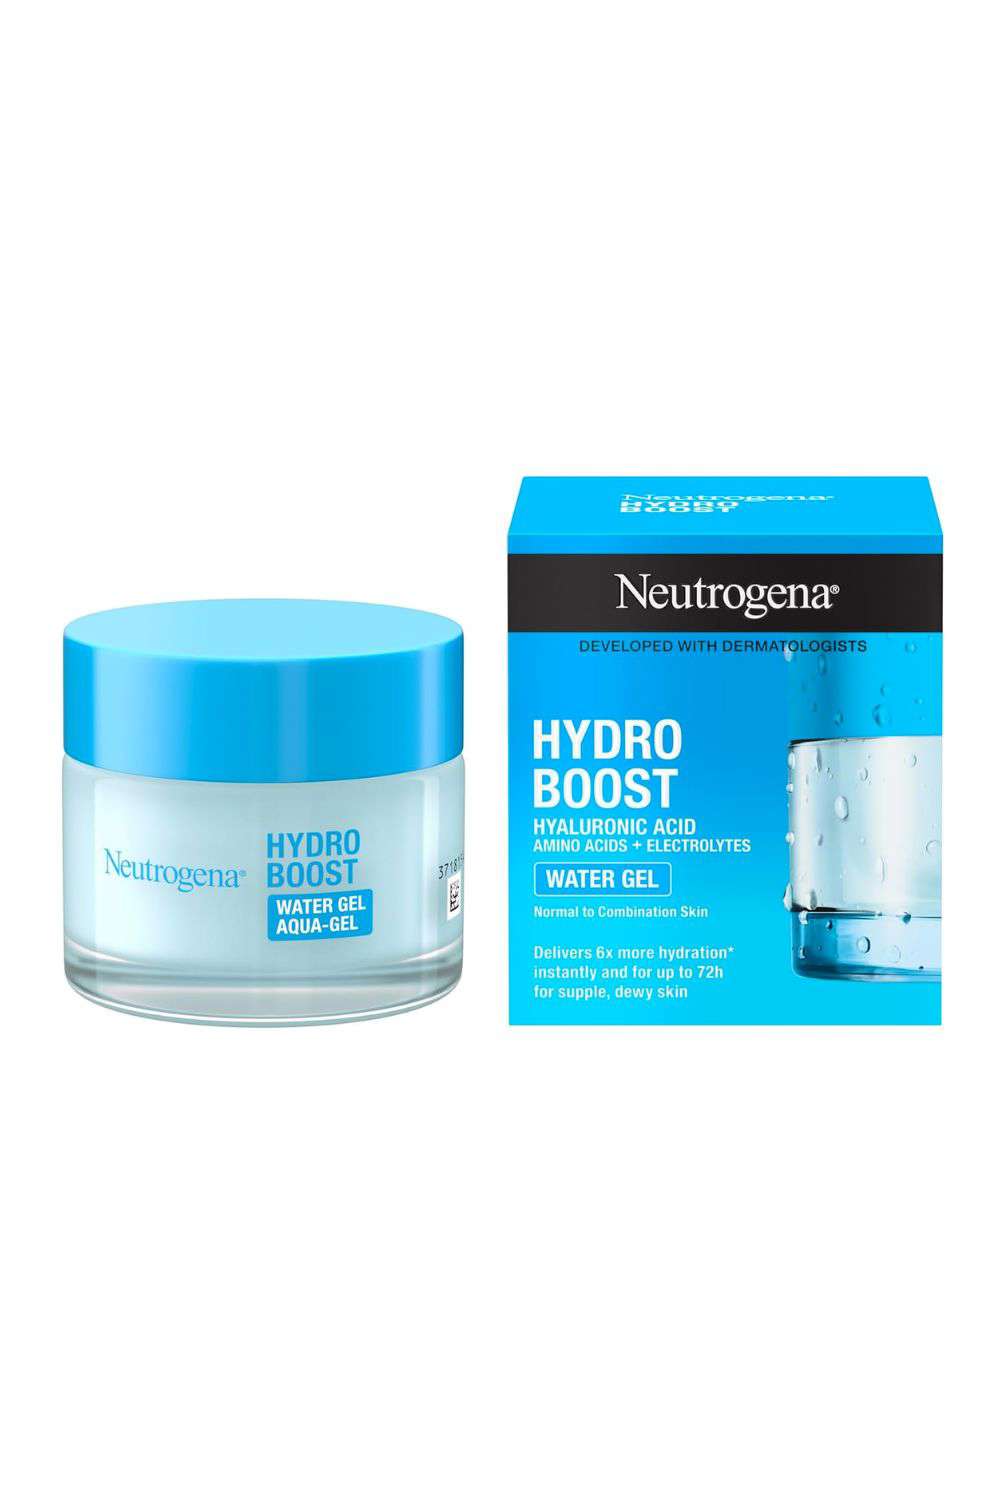  Hydro Boost de Neutrogena